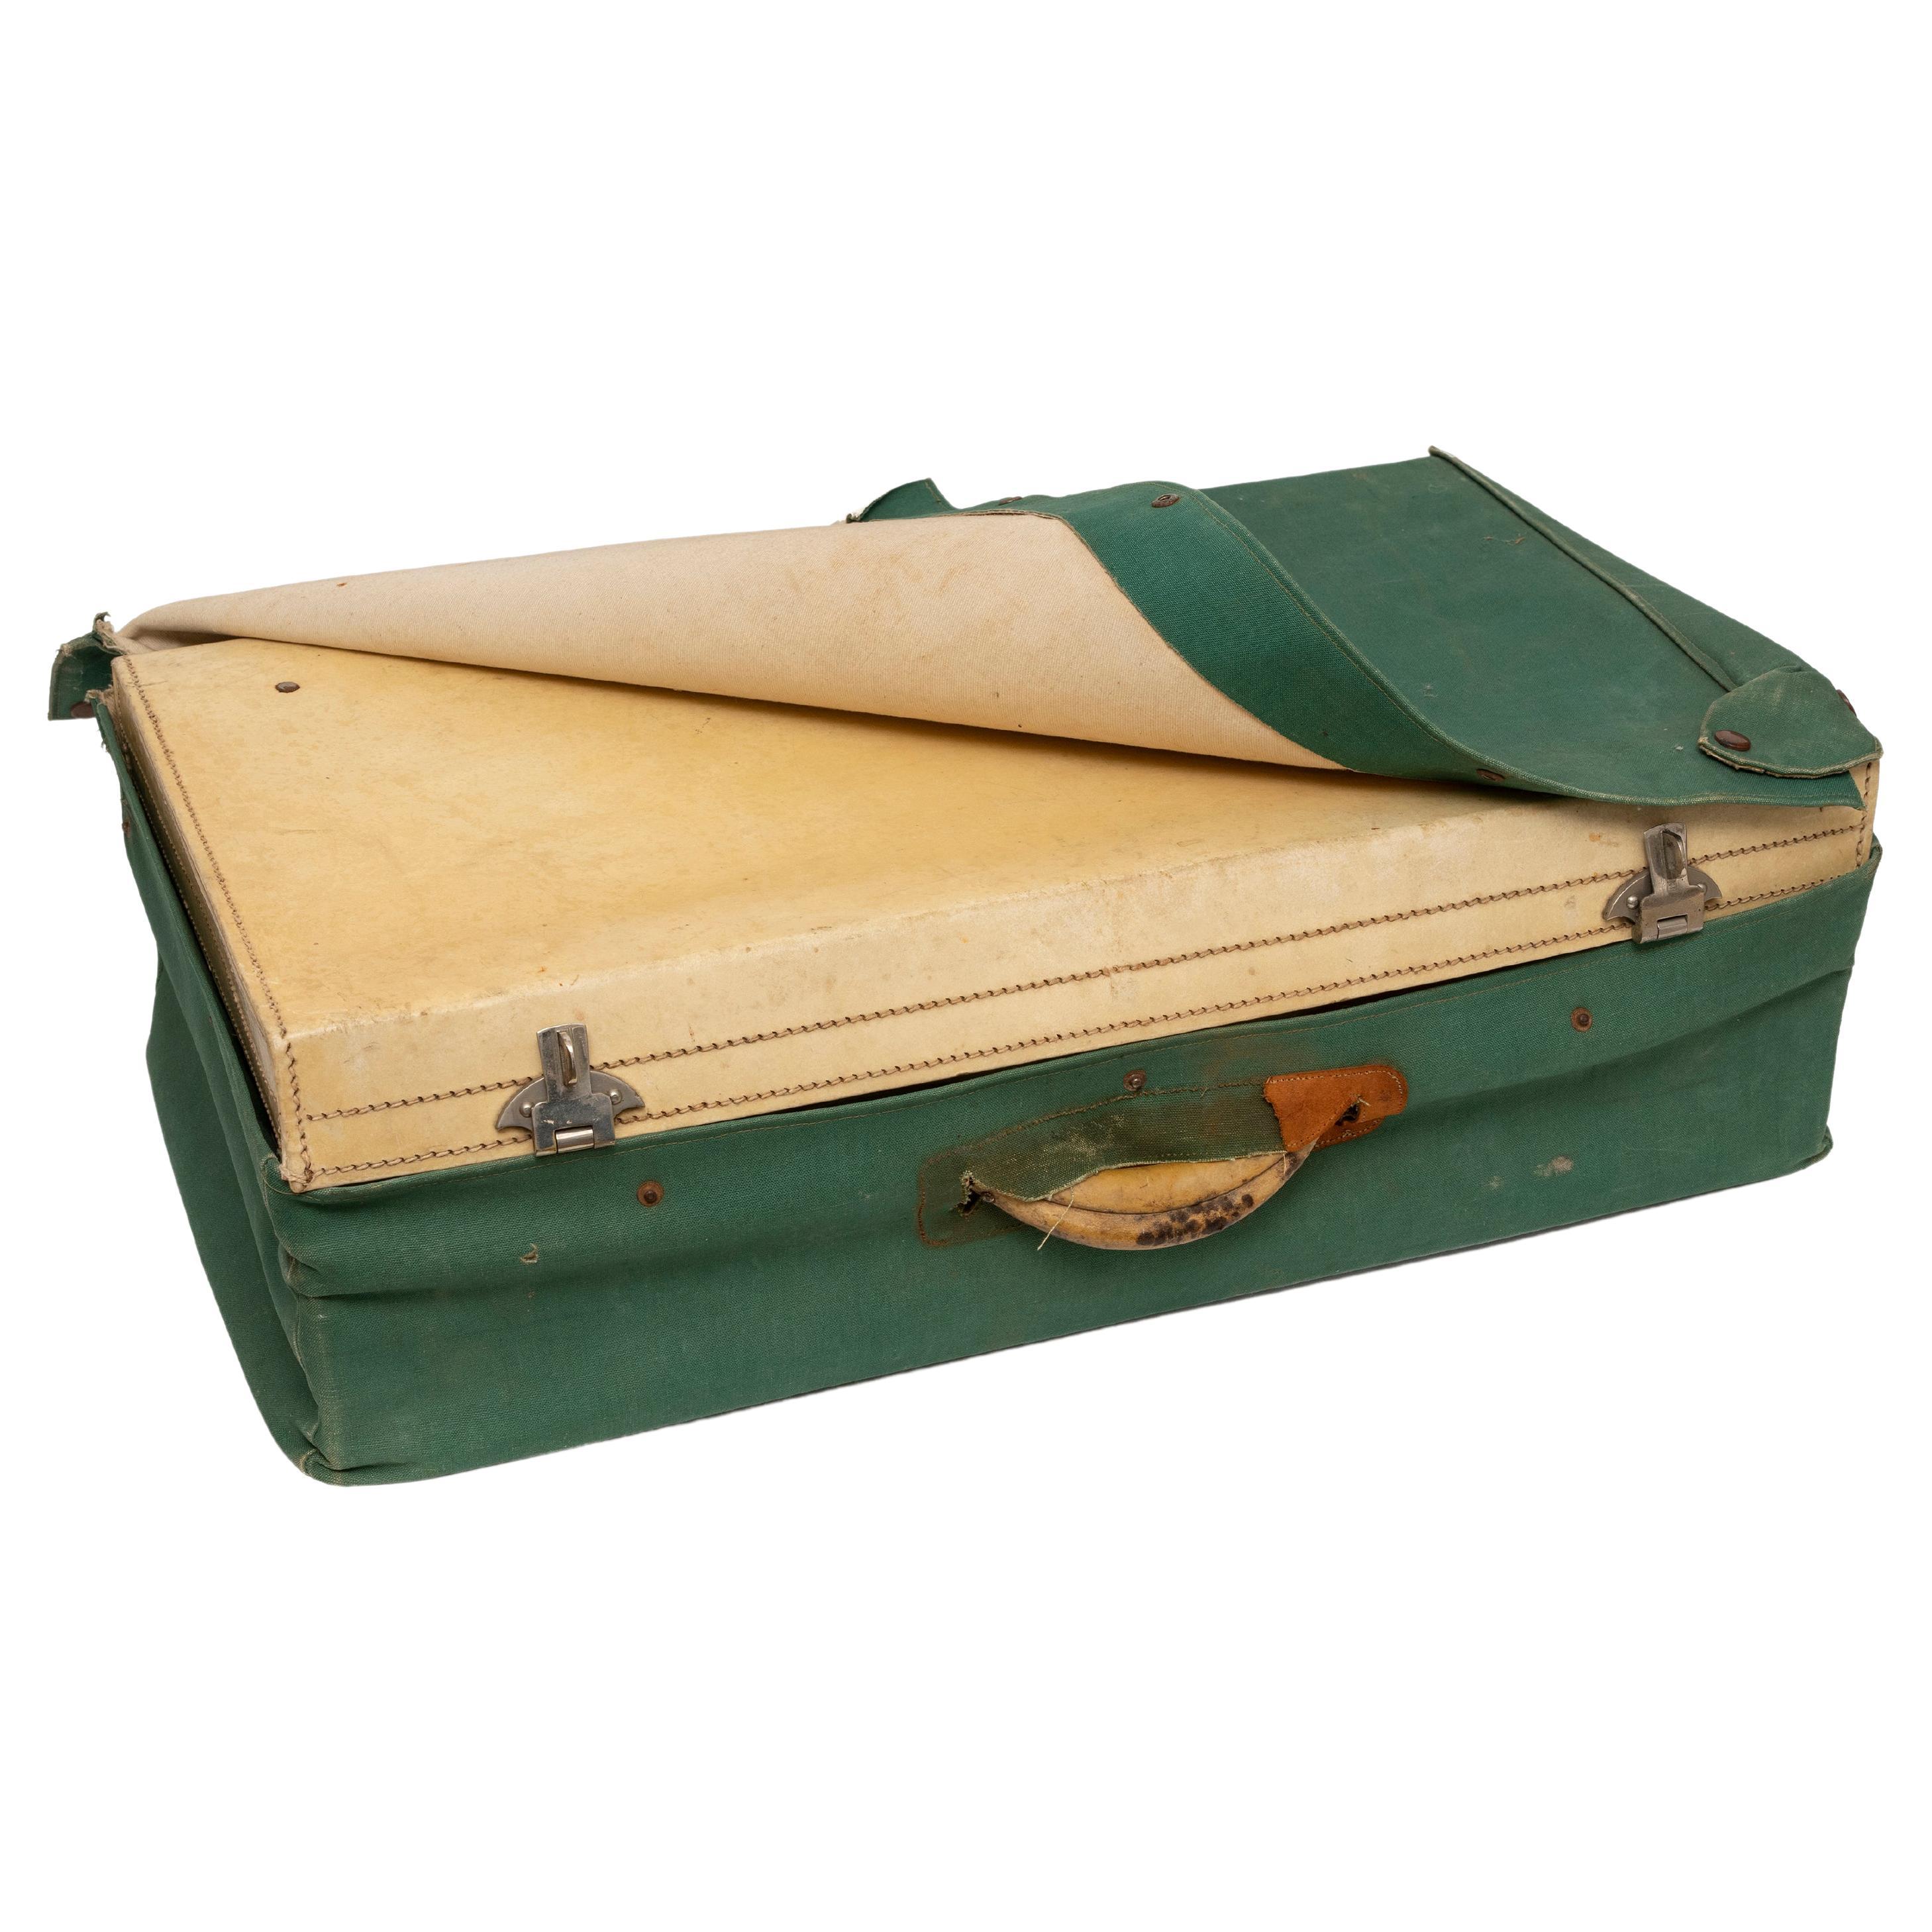 Suitcase Vellum Original Green Cover Nickel Fittings Locks Key x Long For Sale